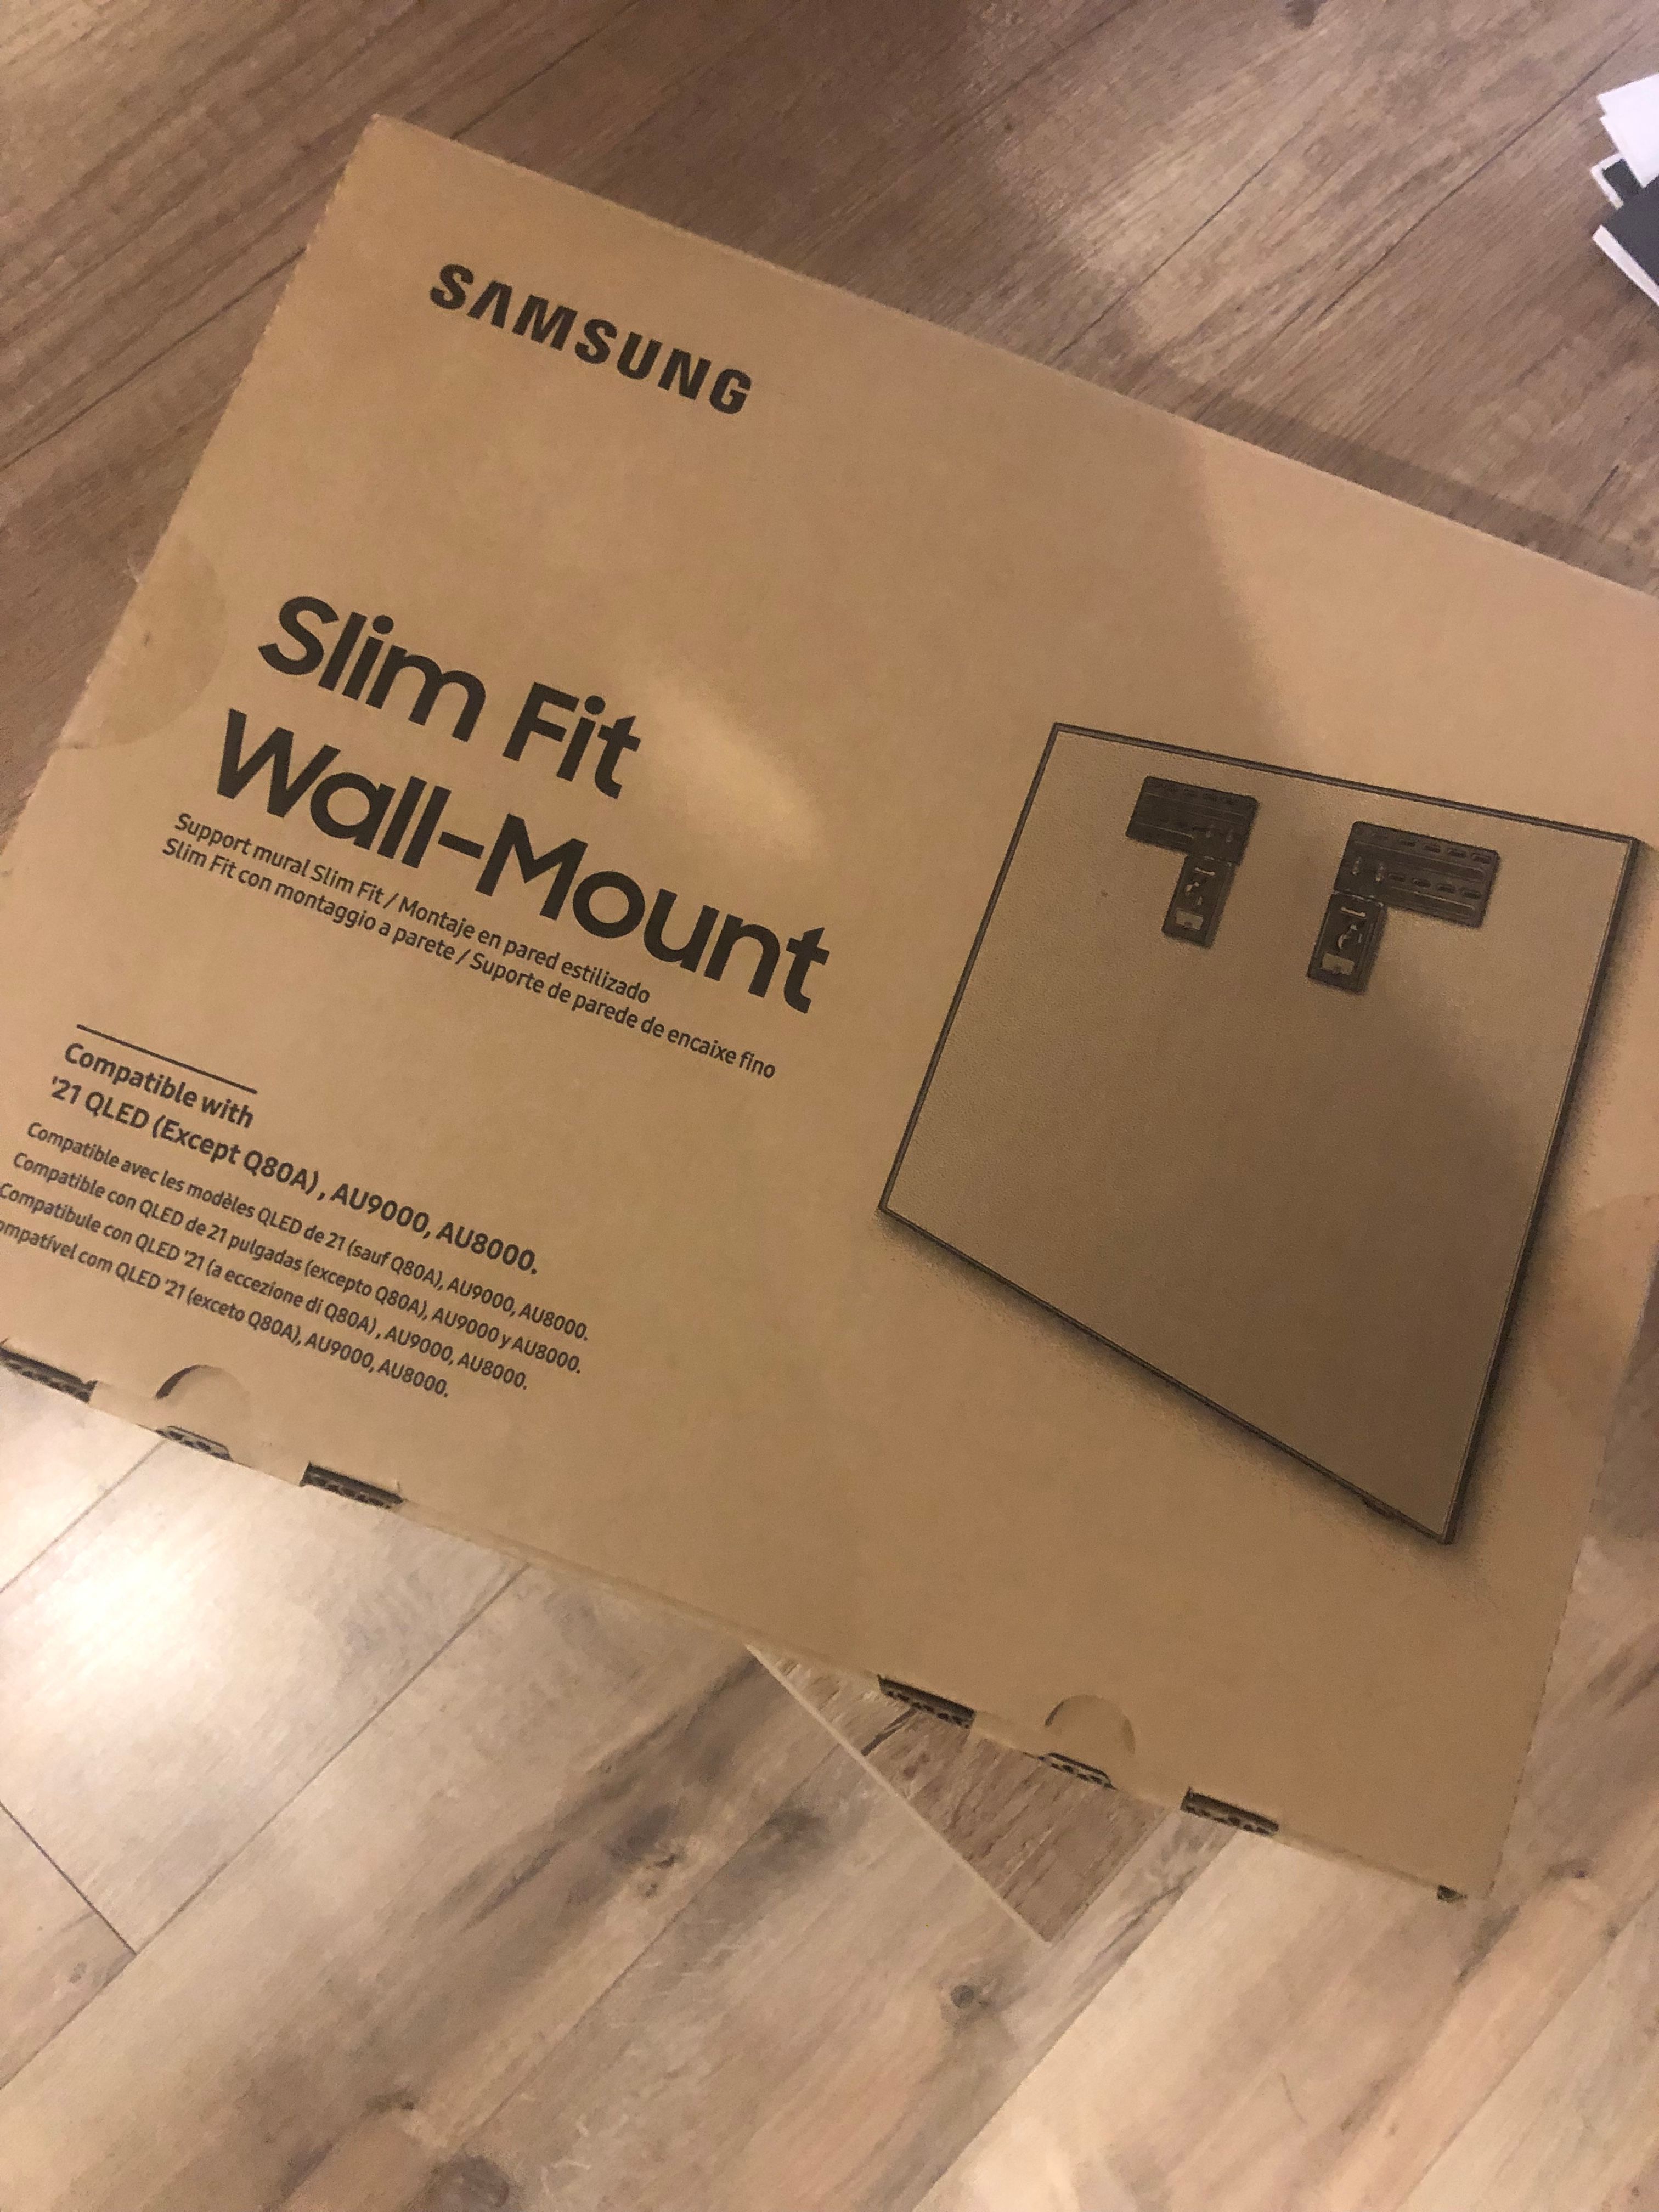 QN95A 65 Zoll - Slim Fit Wall Mount - Samsung Community